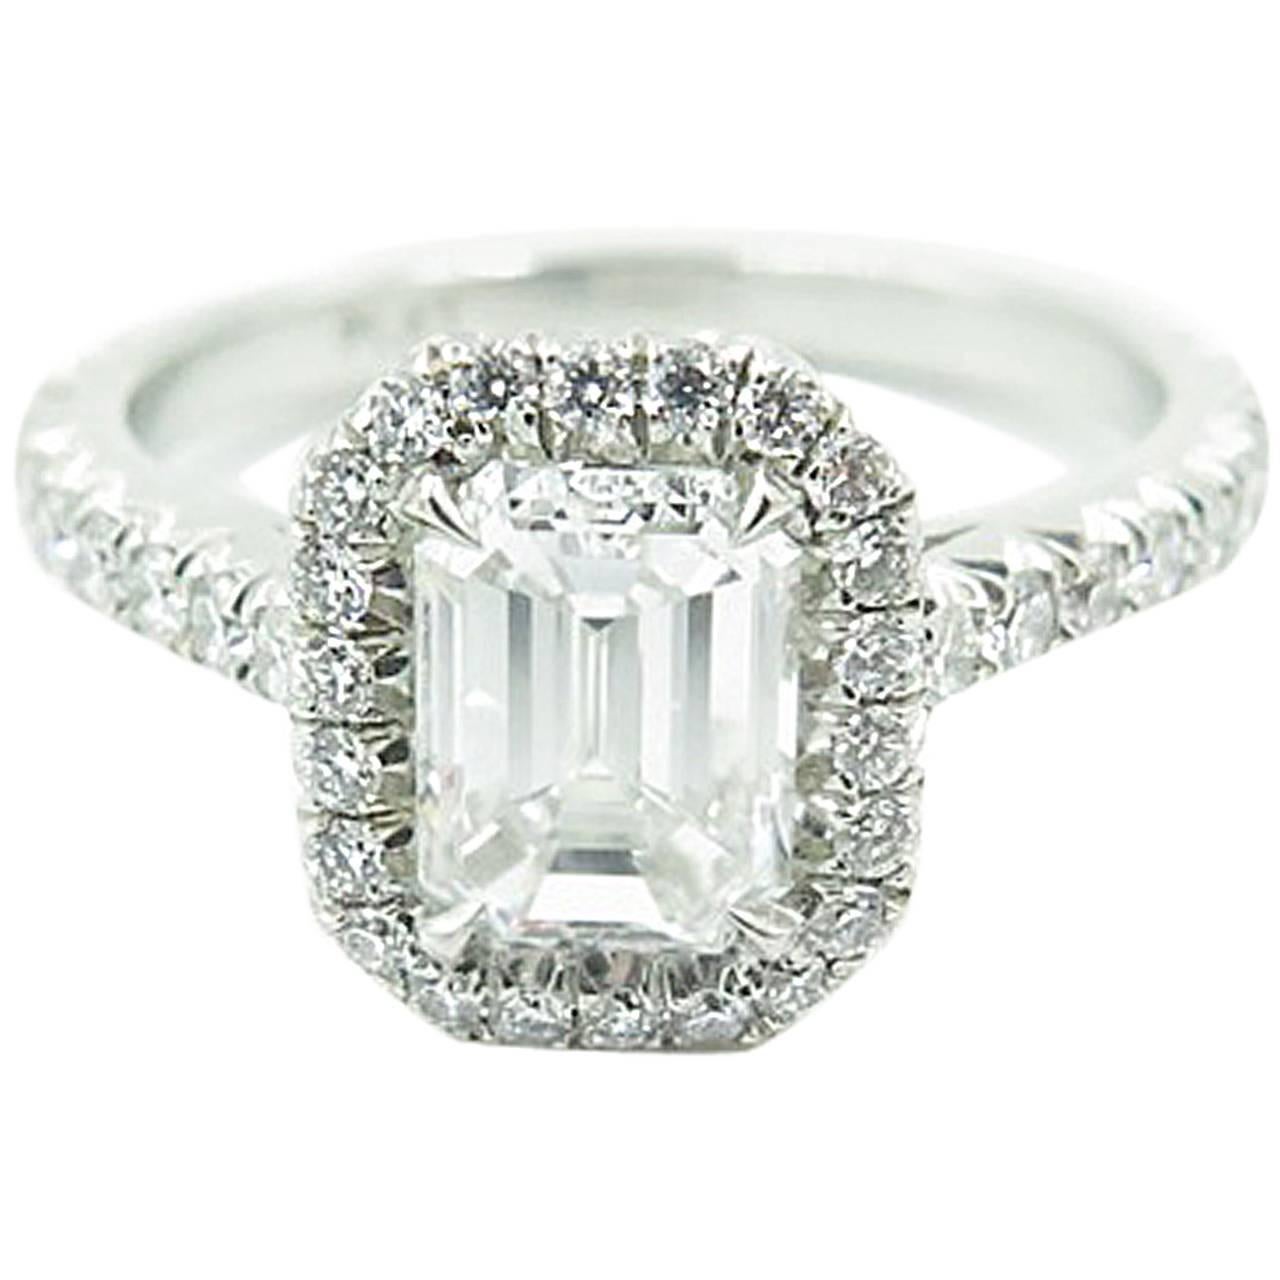 Gorgeous Emerald Cut Diamond Platinum Engagement Ring.